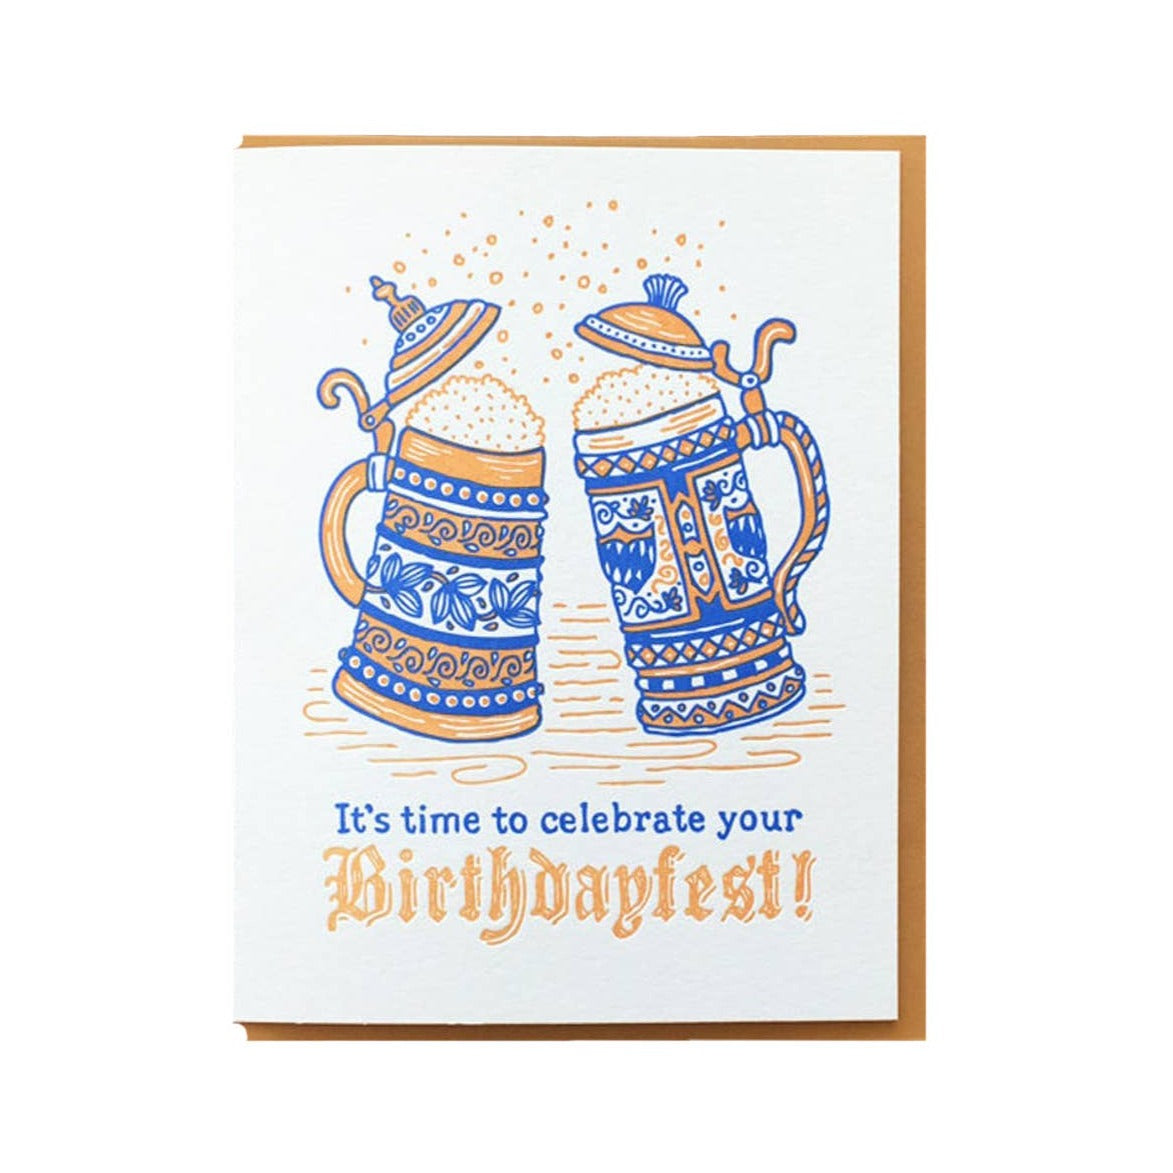 Birthdayfest Card